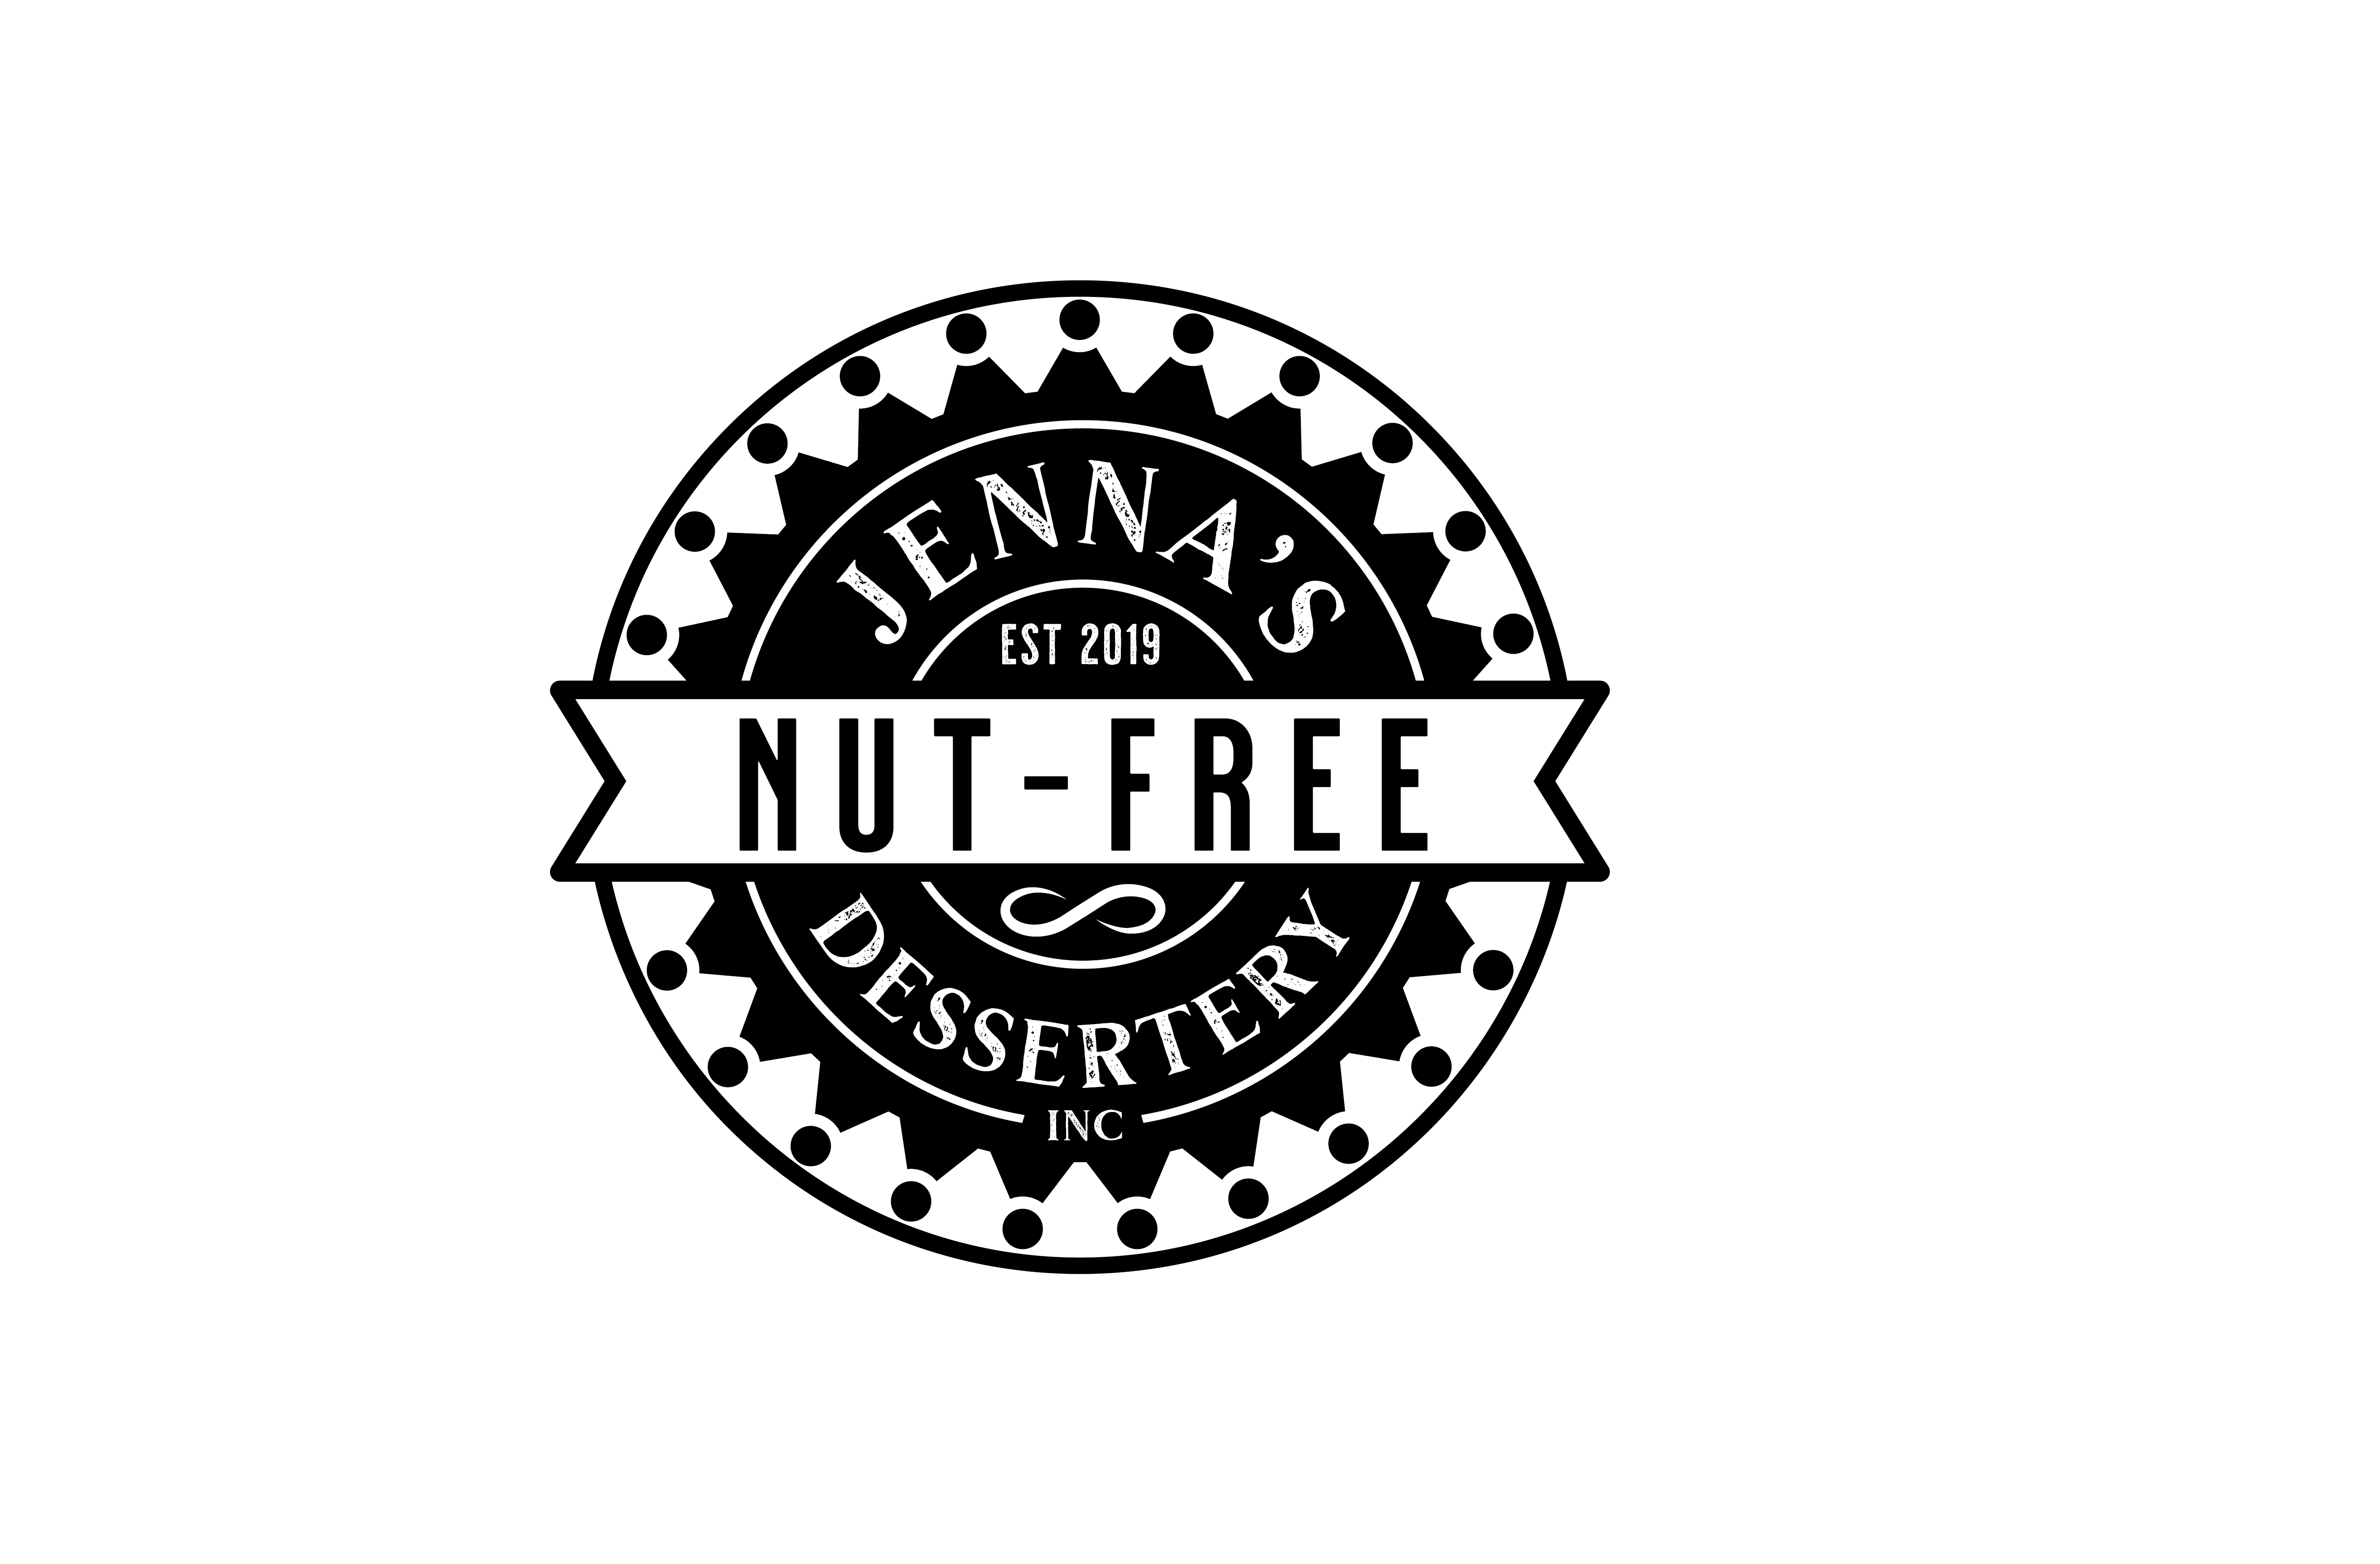 Jenna’s Nut-Free Dessertery Inc.